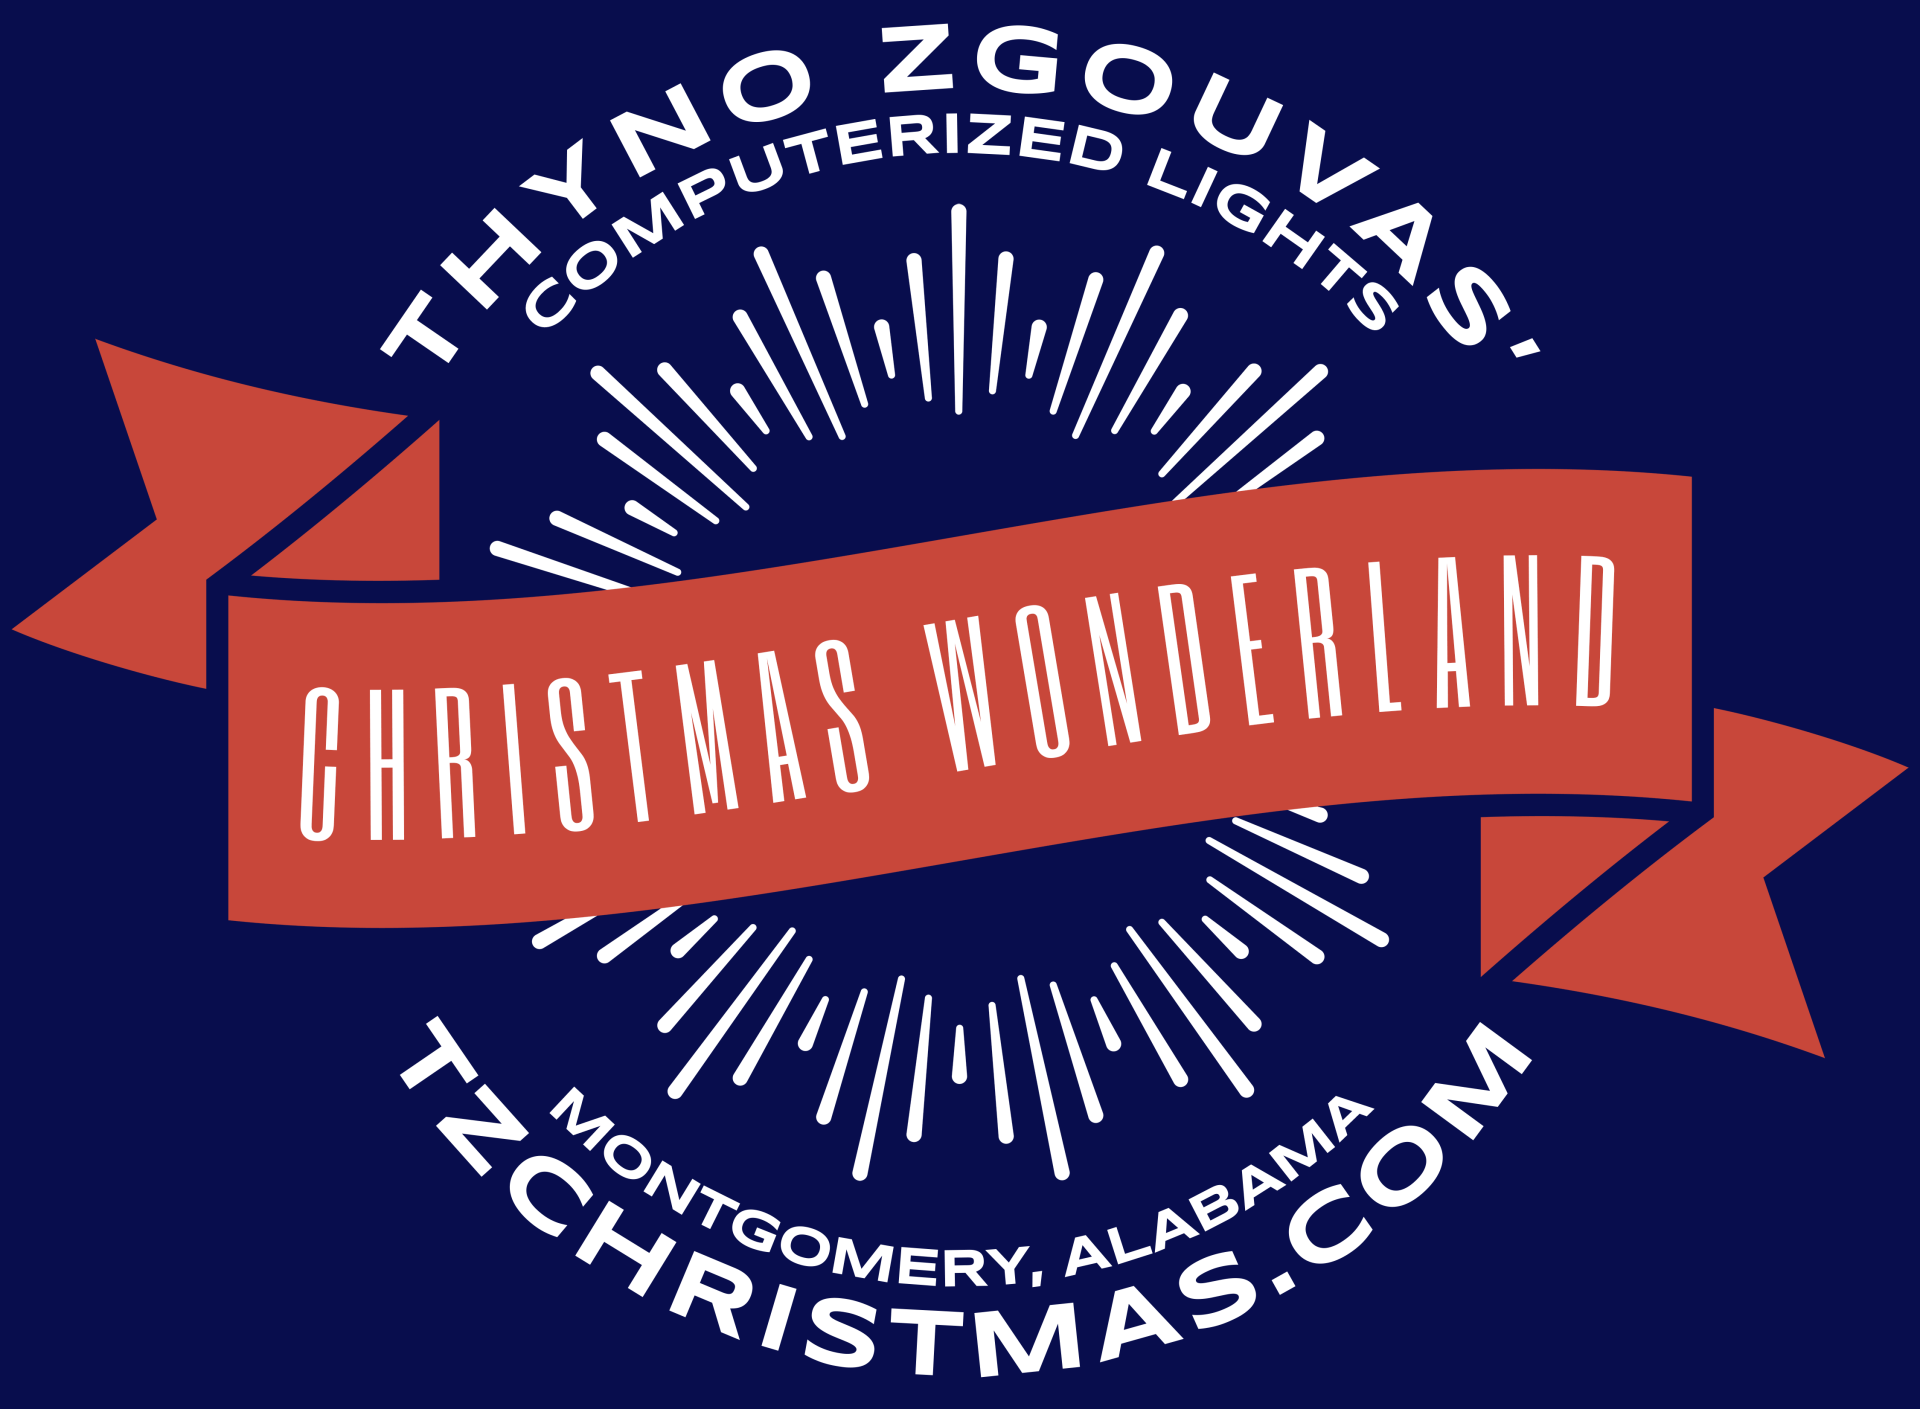 Thyno Zgouvas Christmas Wonderland Home